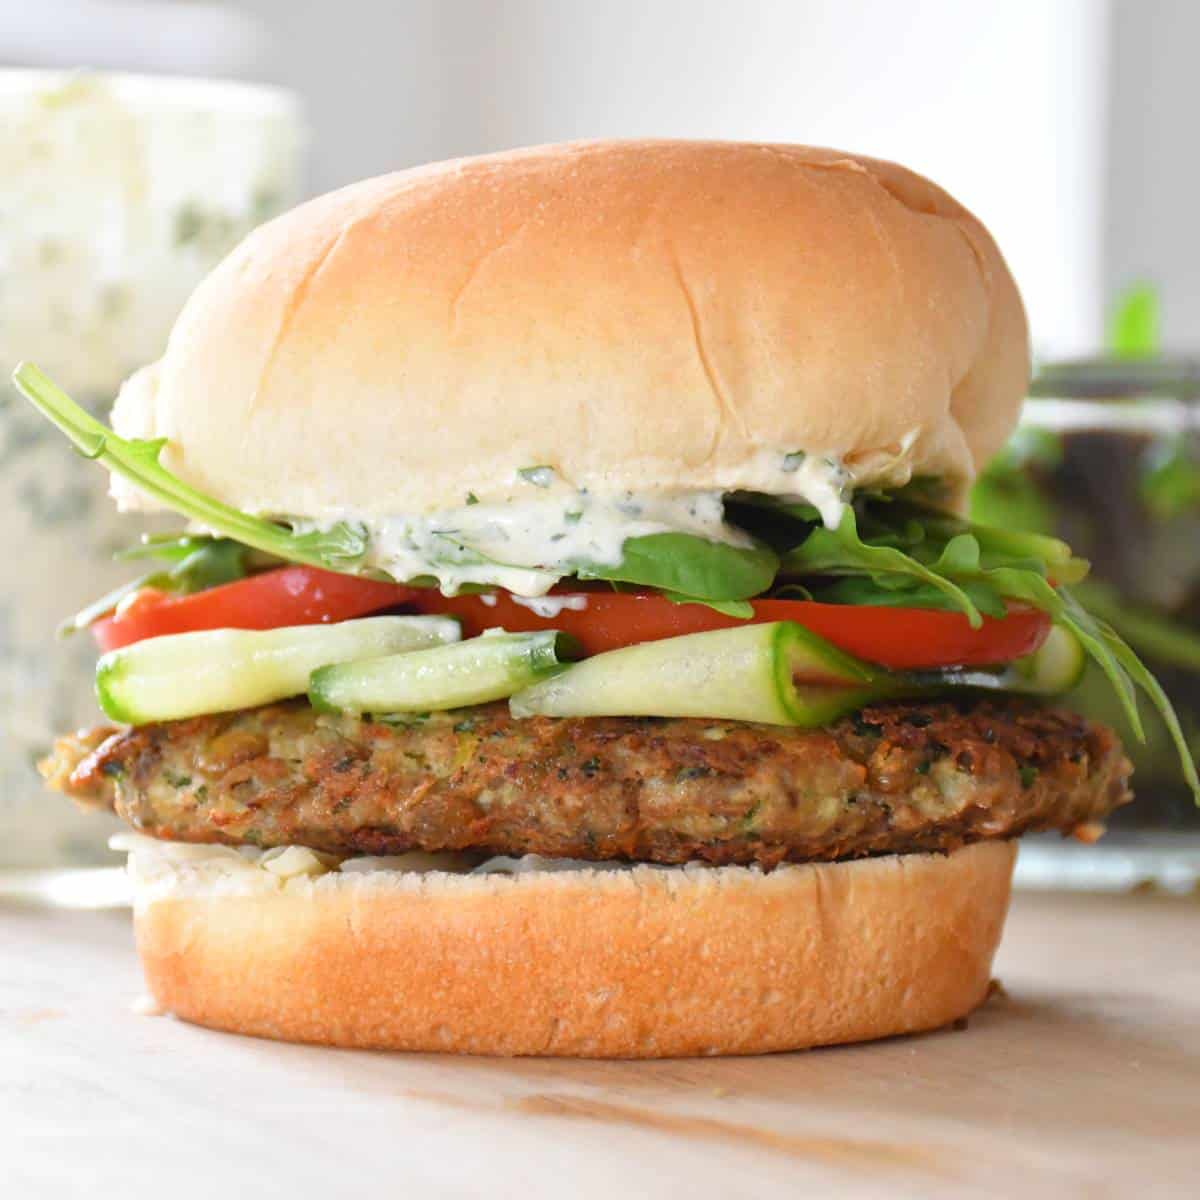 Low sodium cilantro pork burger that uses lentils and fresh ingredients.